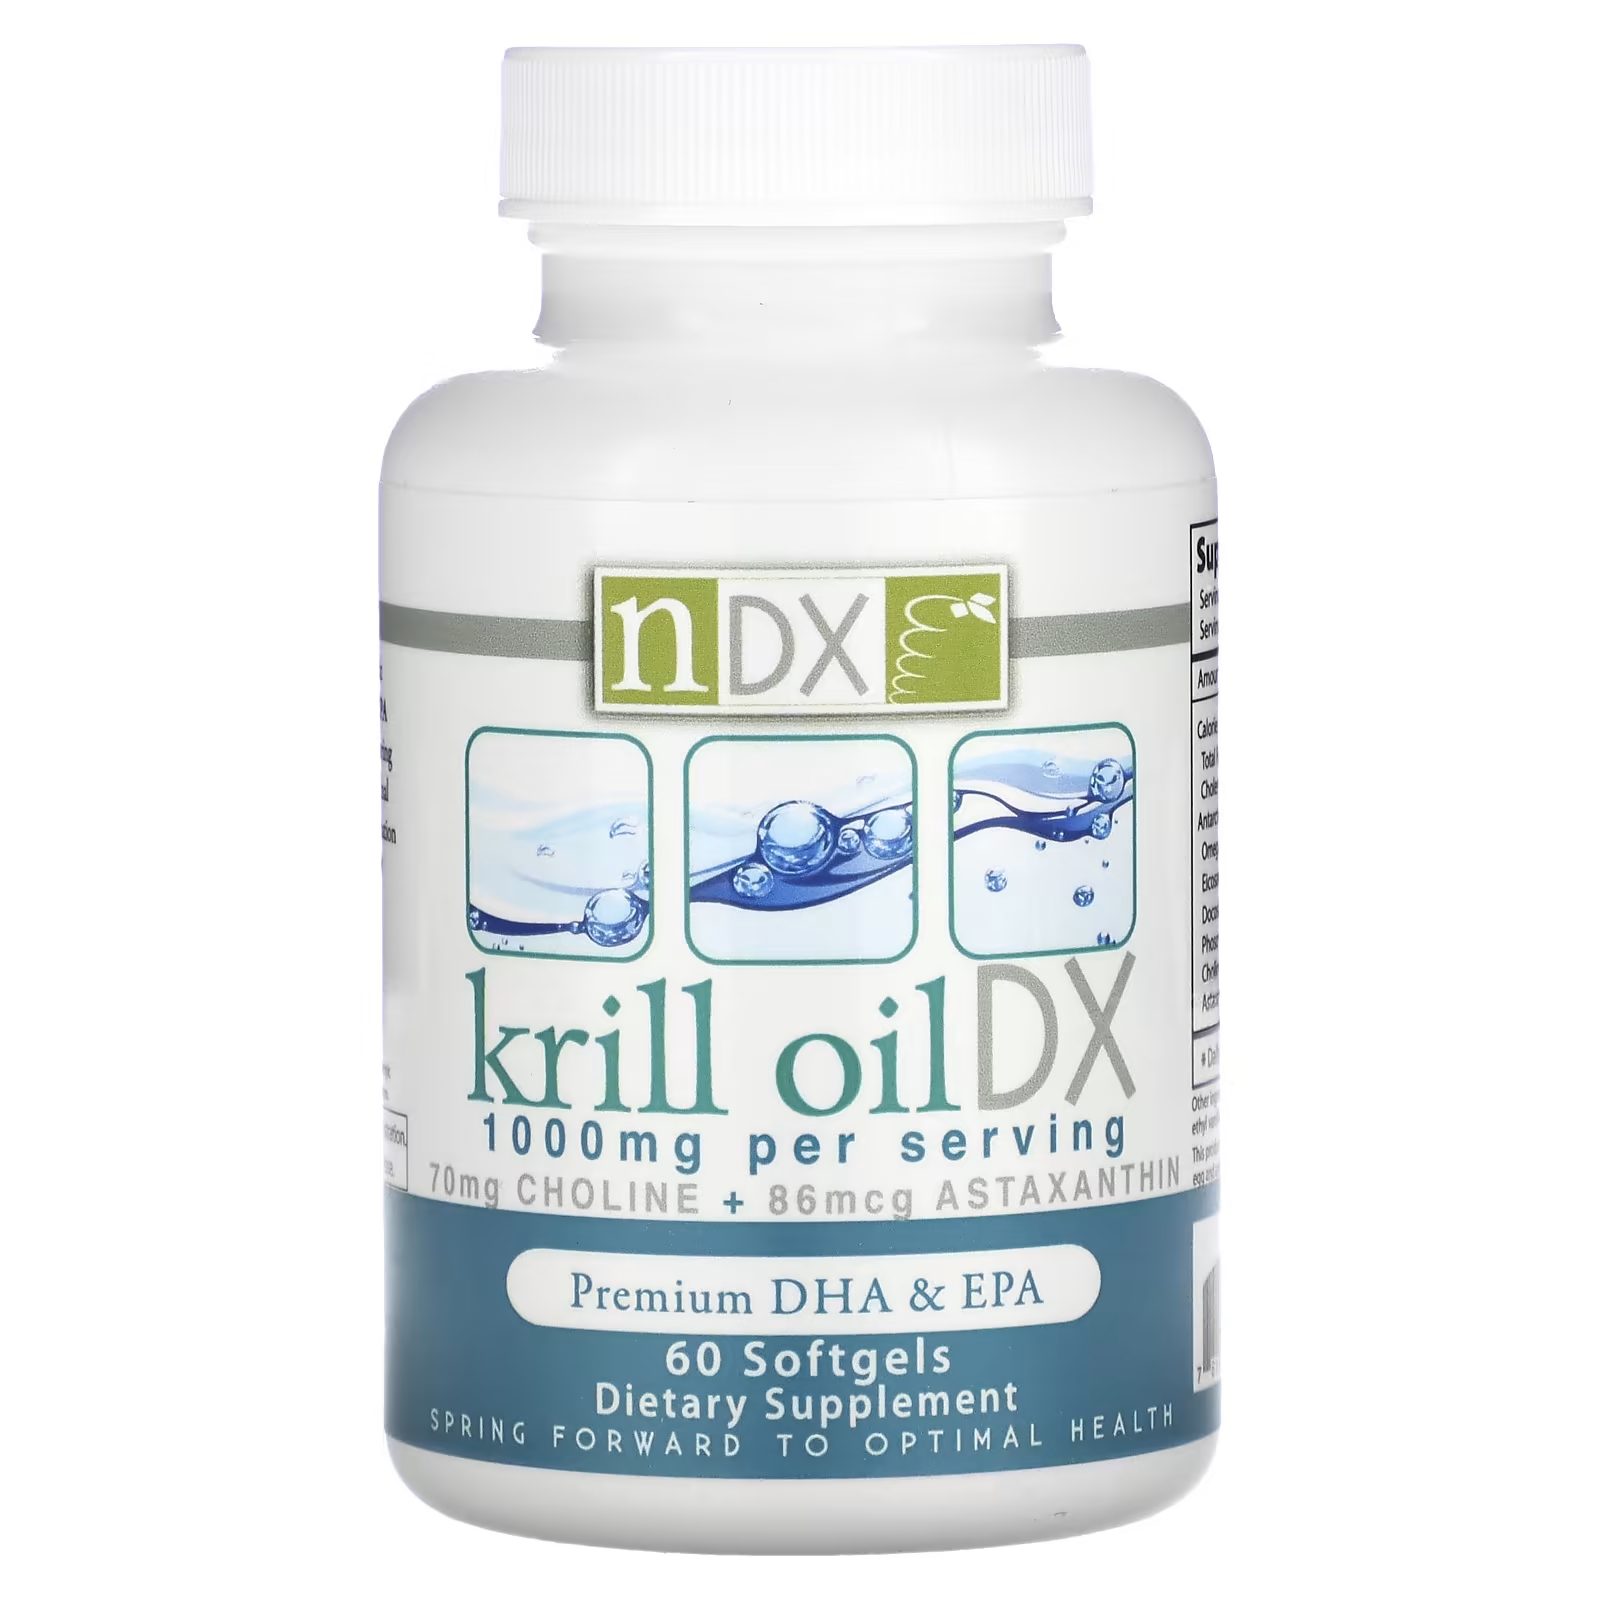 Пищевая добавка Natural Dynamix Krill Oil DX Premium DHA и EPA 1000 мг, 60 мягких таблеток пищевая добавка swanson triple strength super epa и dha 900 мг 60 мягких таблеток